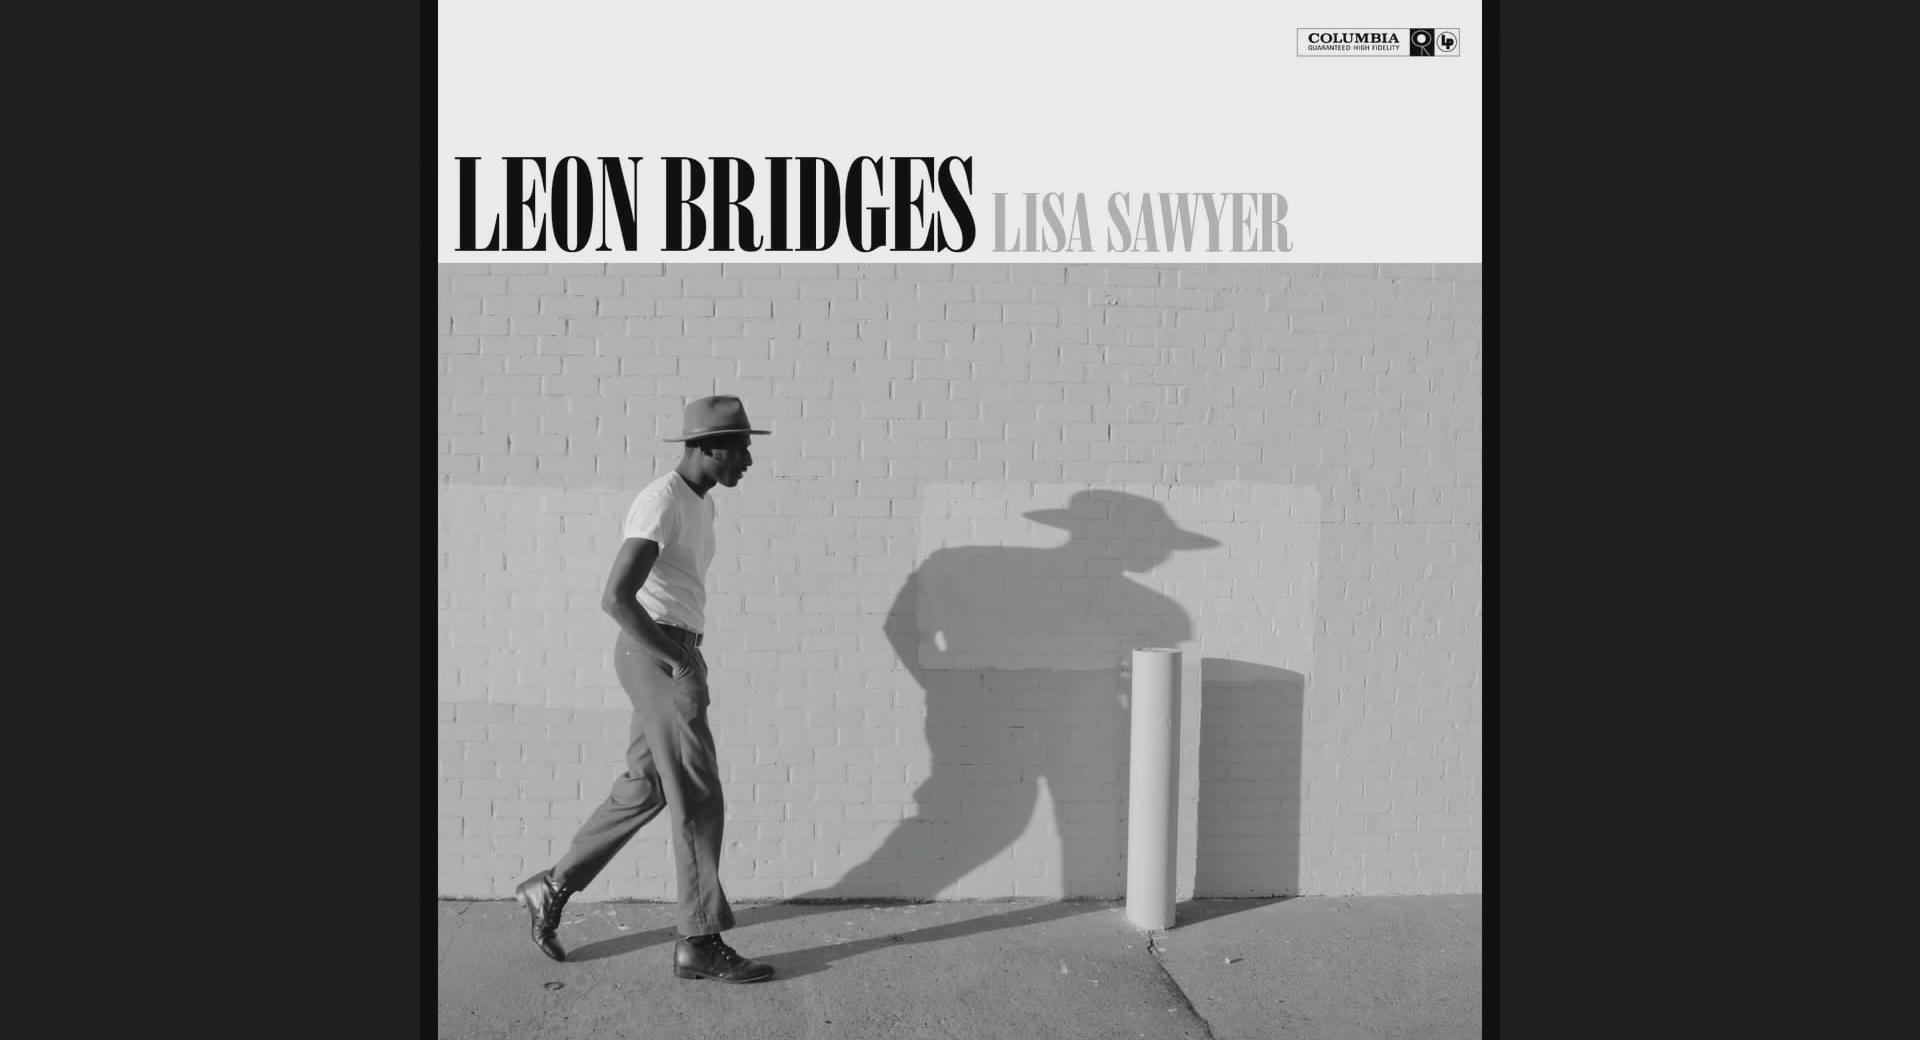 Leon Bridges - Lisa Sawyer (Official Audio)